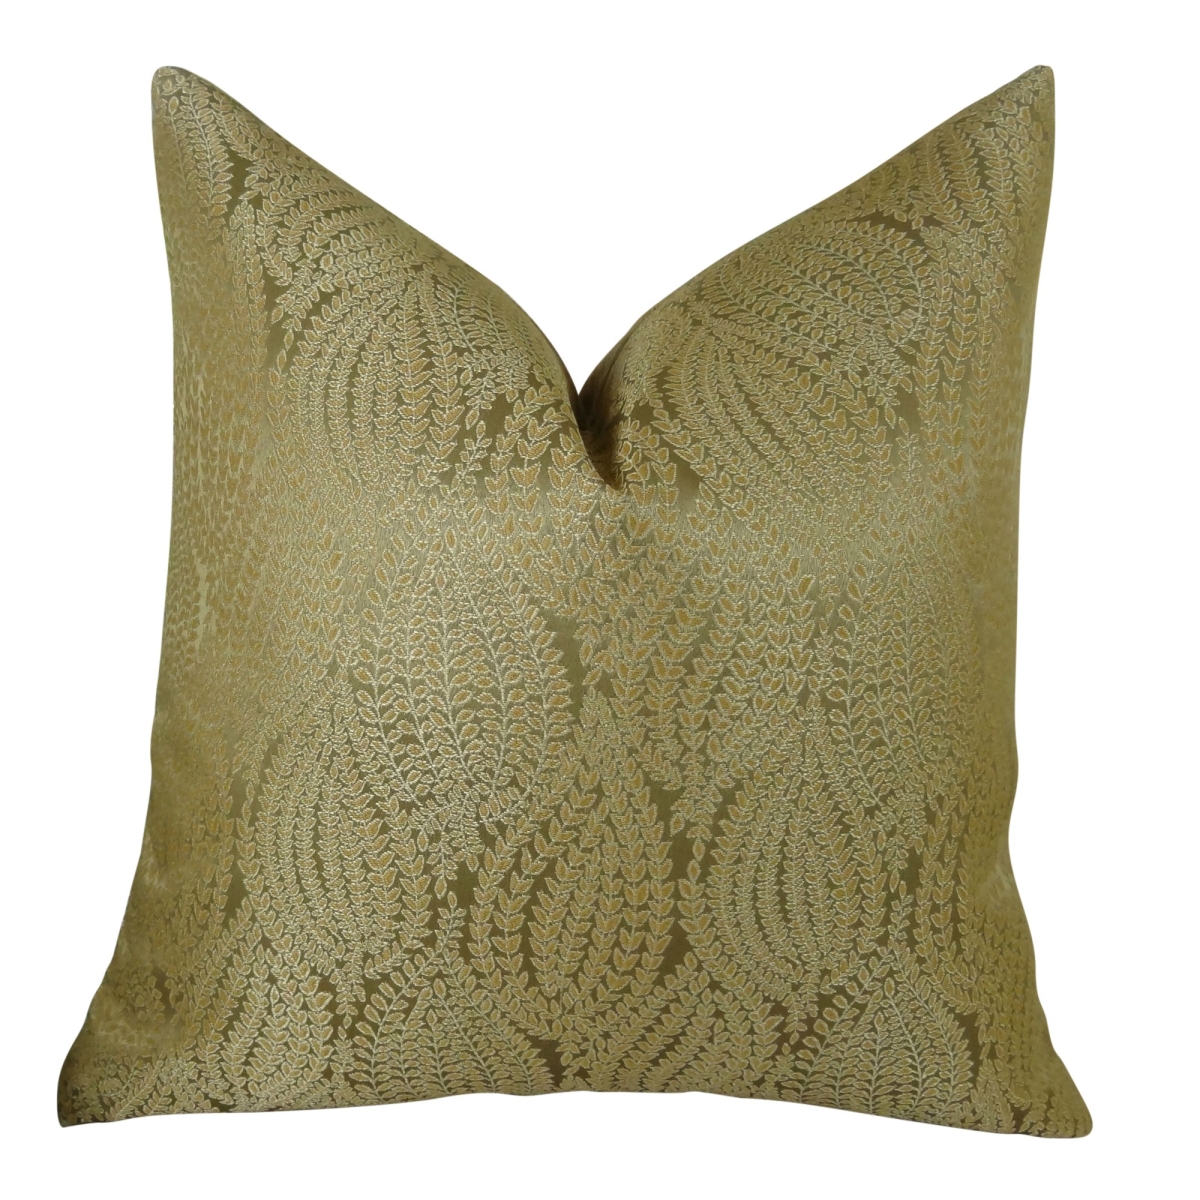 Pb11015-1616-sp Leaf Pod Handmade Throw Pillow, Gold - 16 X 16 In.